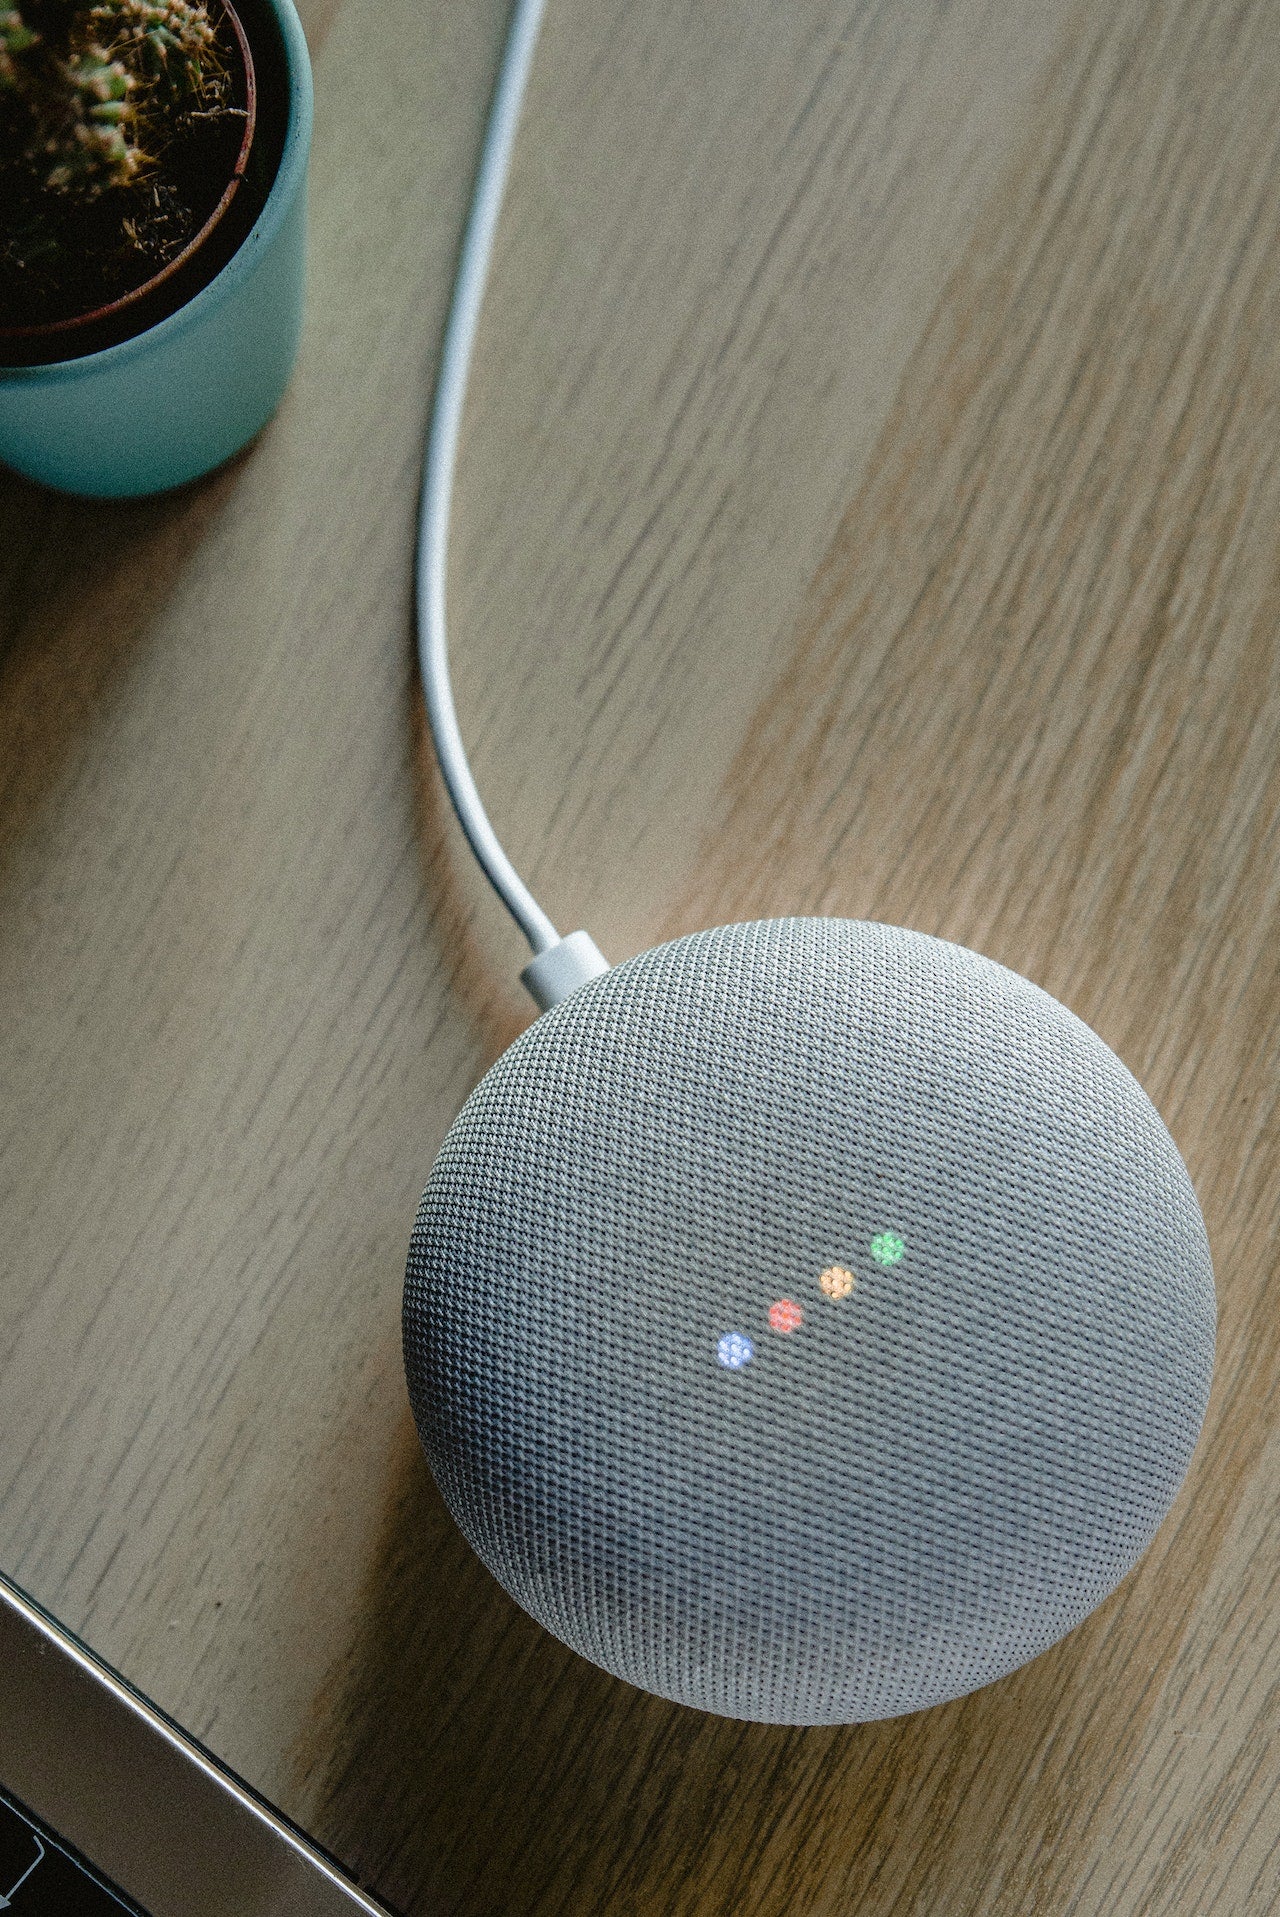 Google smart home device